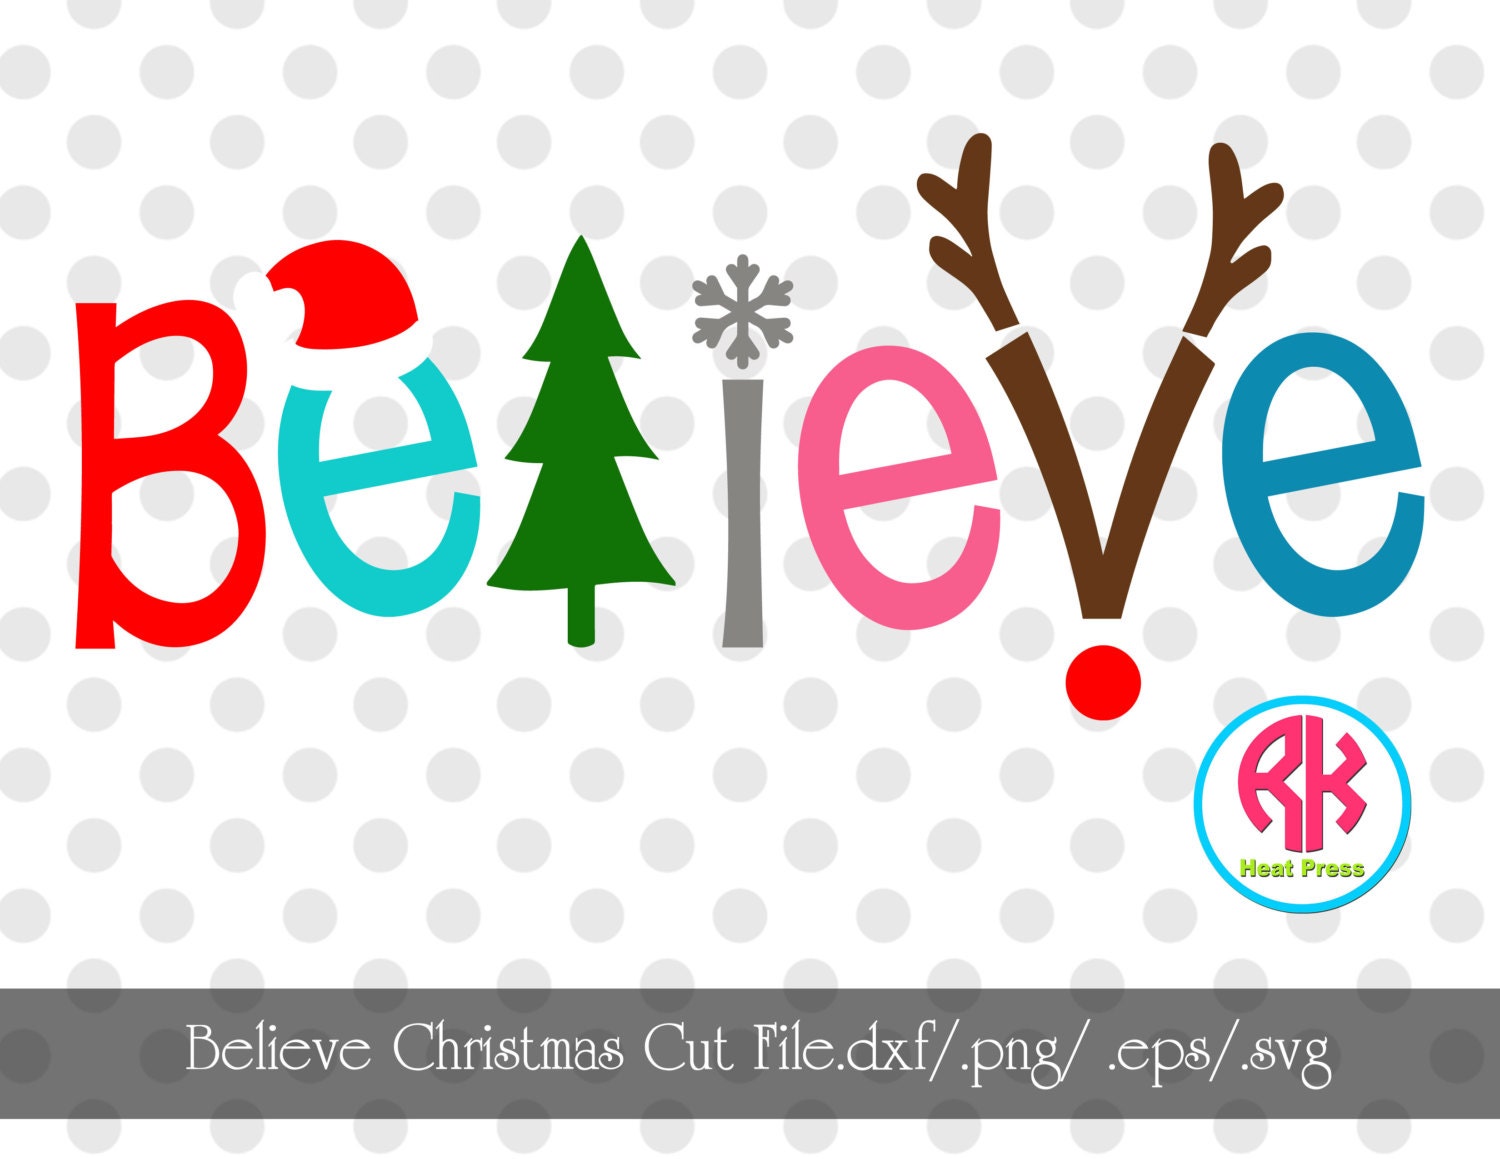 Believe Christmas Cut File .png/.dxf/.eps/.svg by RKHeatPress